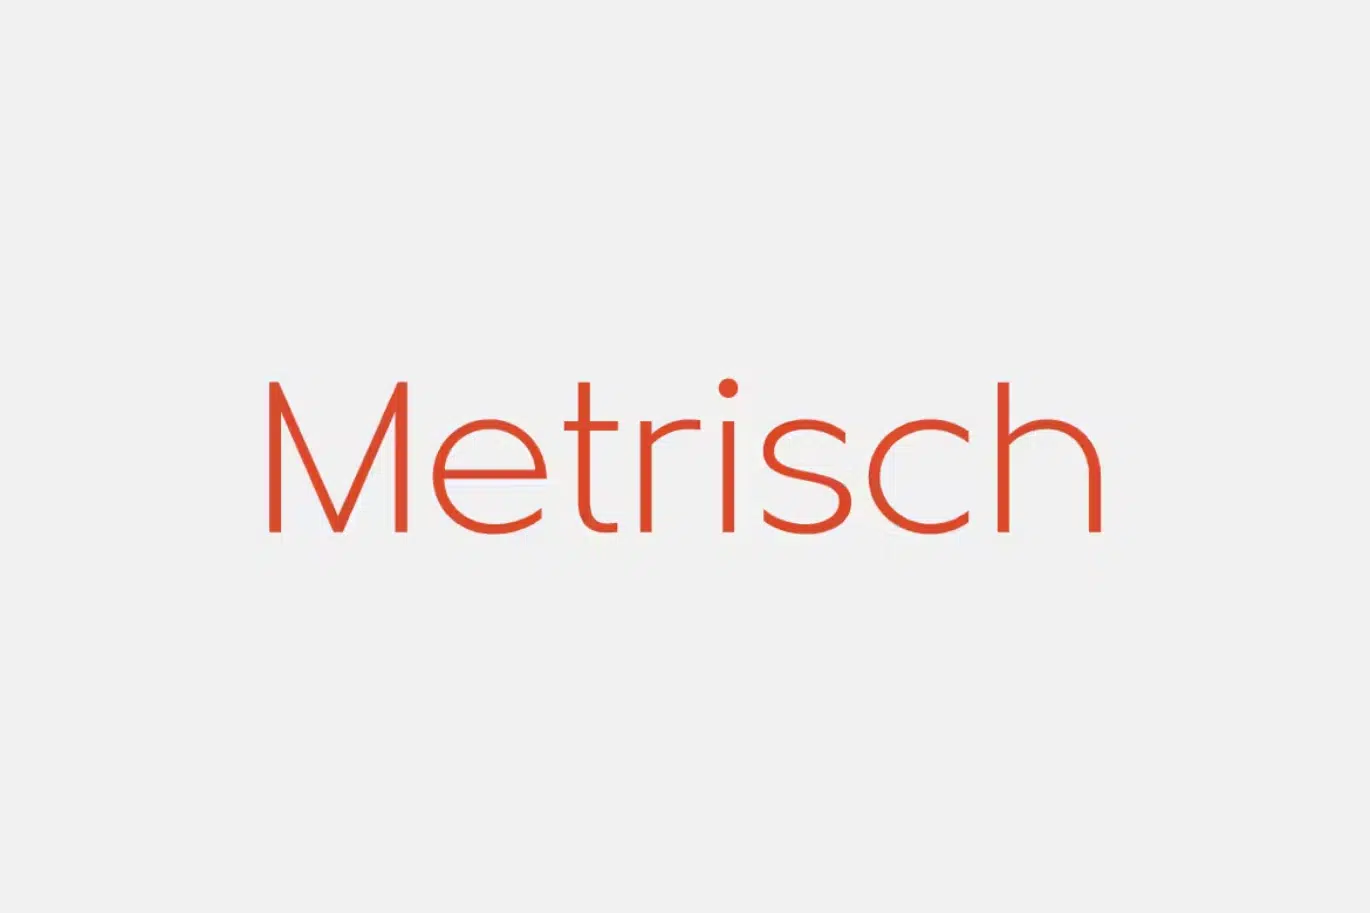 Metrisch Font Similar To Raleway